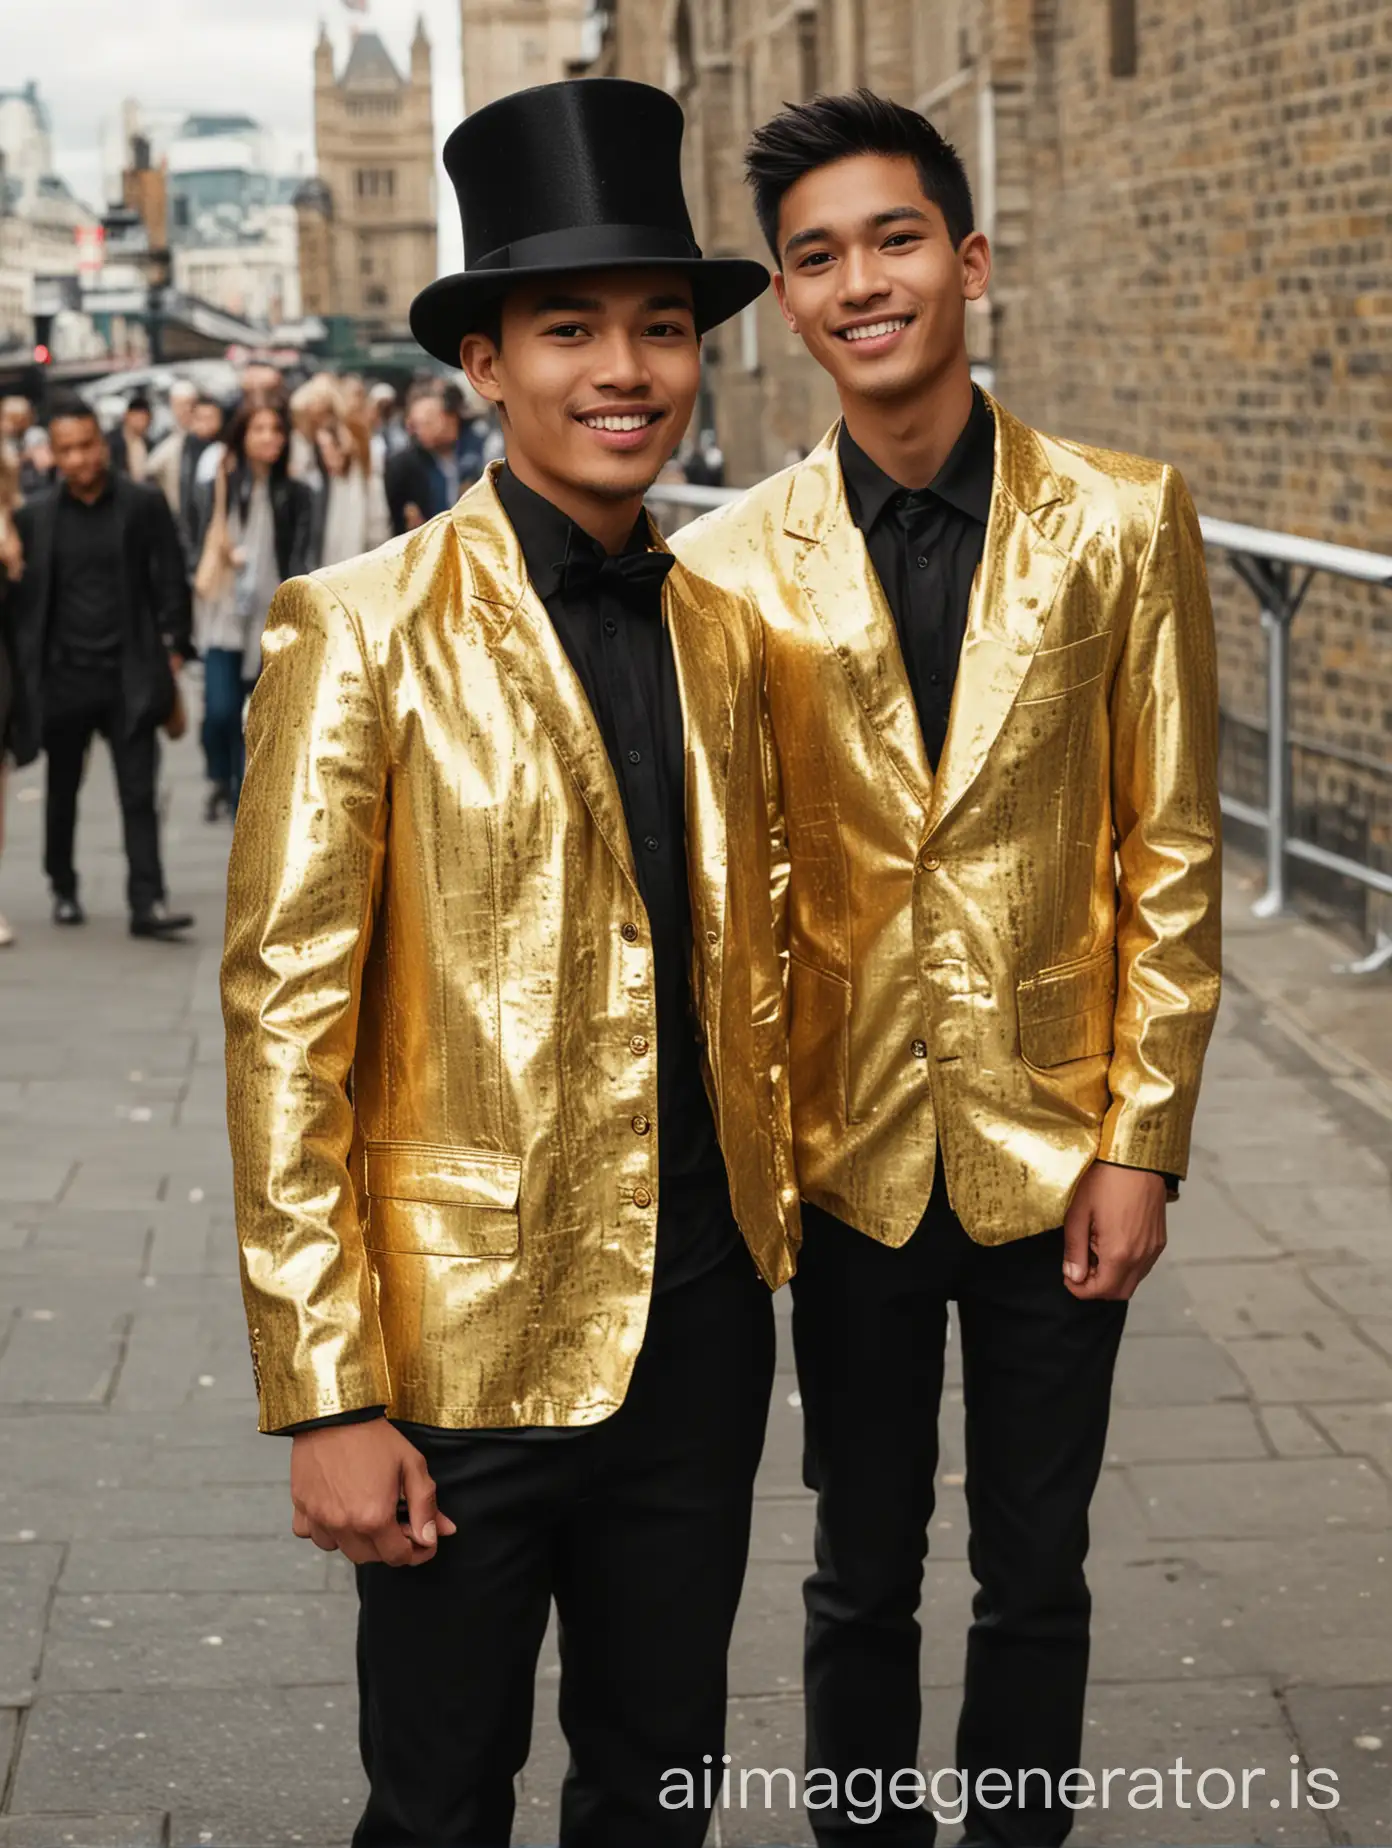 Stylish-Filipino-Man-in-Gold-Foil-Jacket-at-London-Bridge